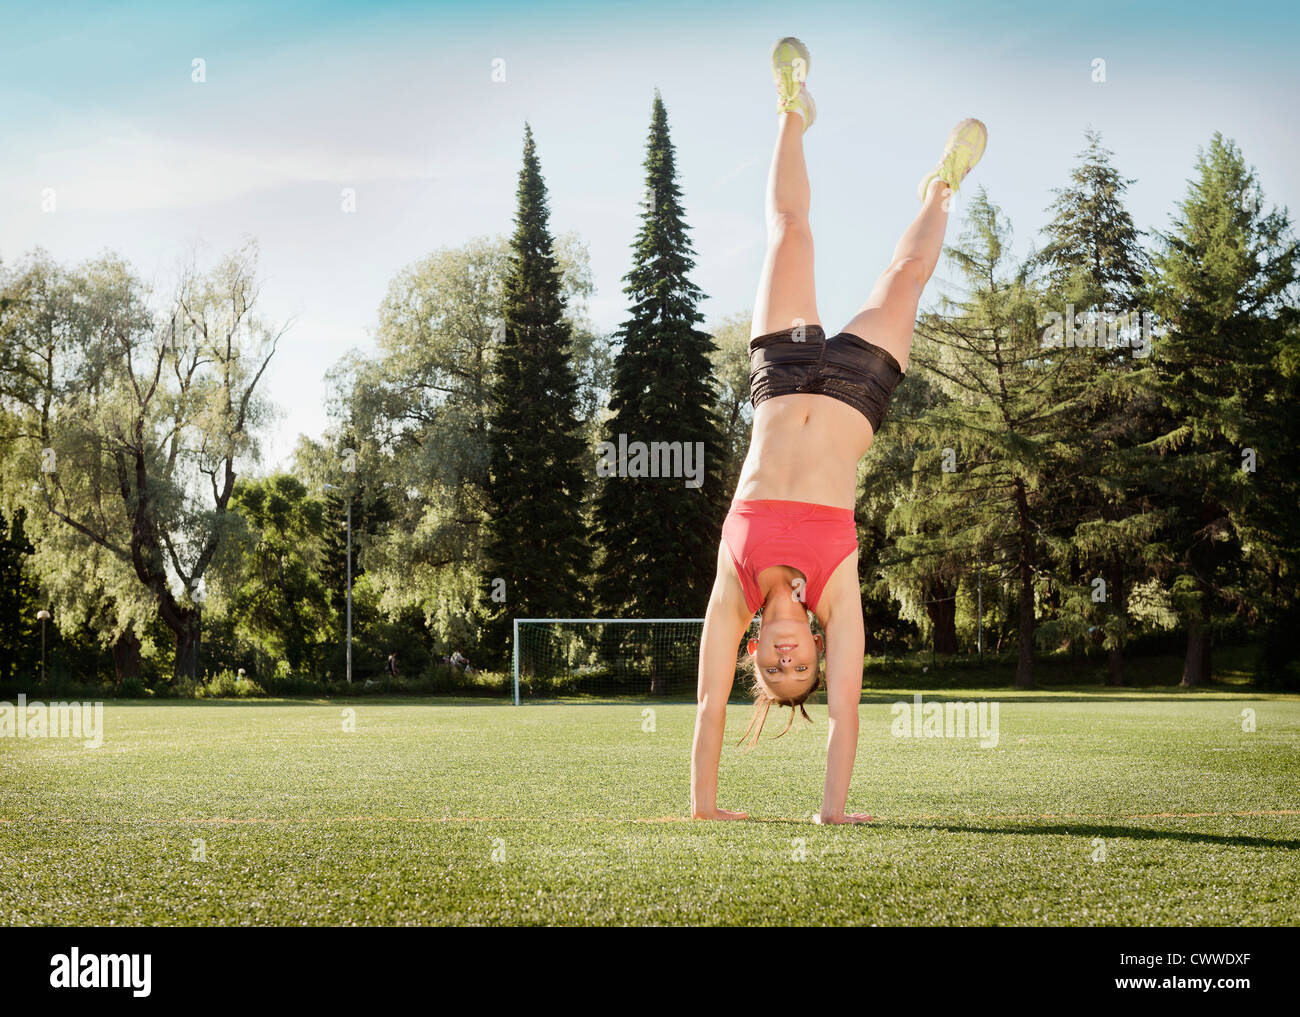 Woman doing cartwheel in park Stock Photo